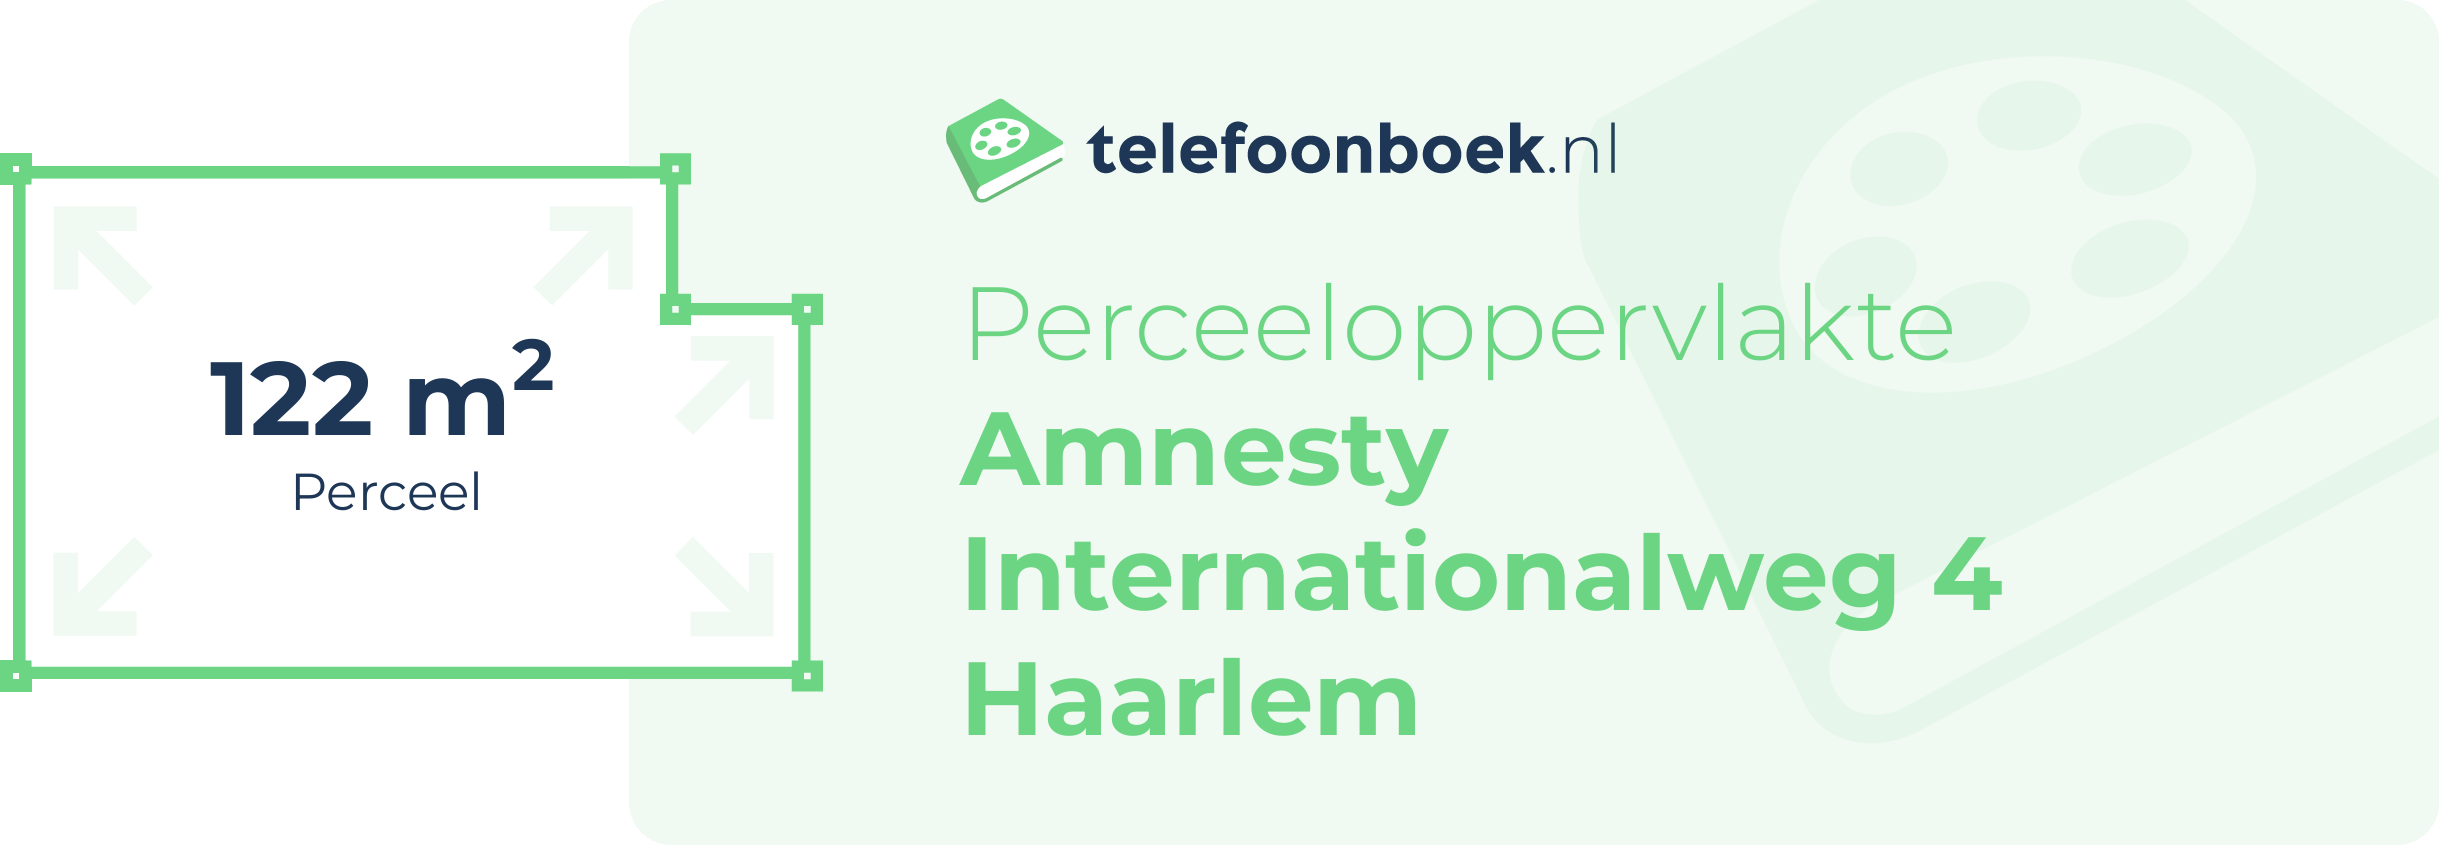 Perceeloppervlakte Amnesty Internationalweg 4 Haarlem